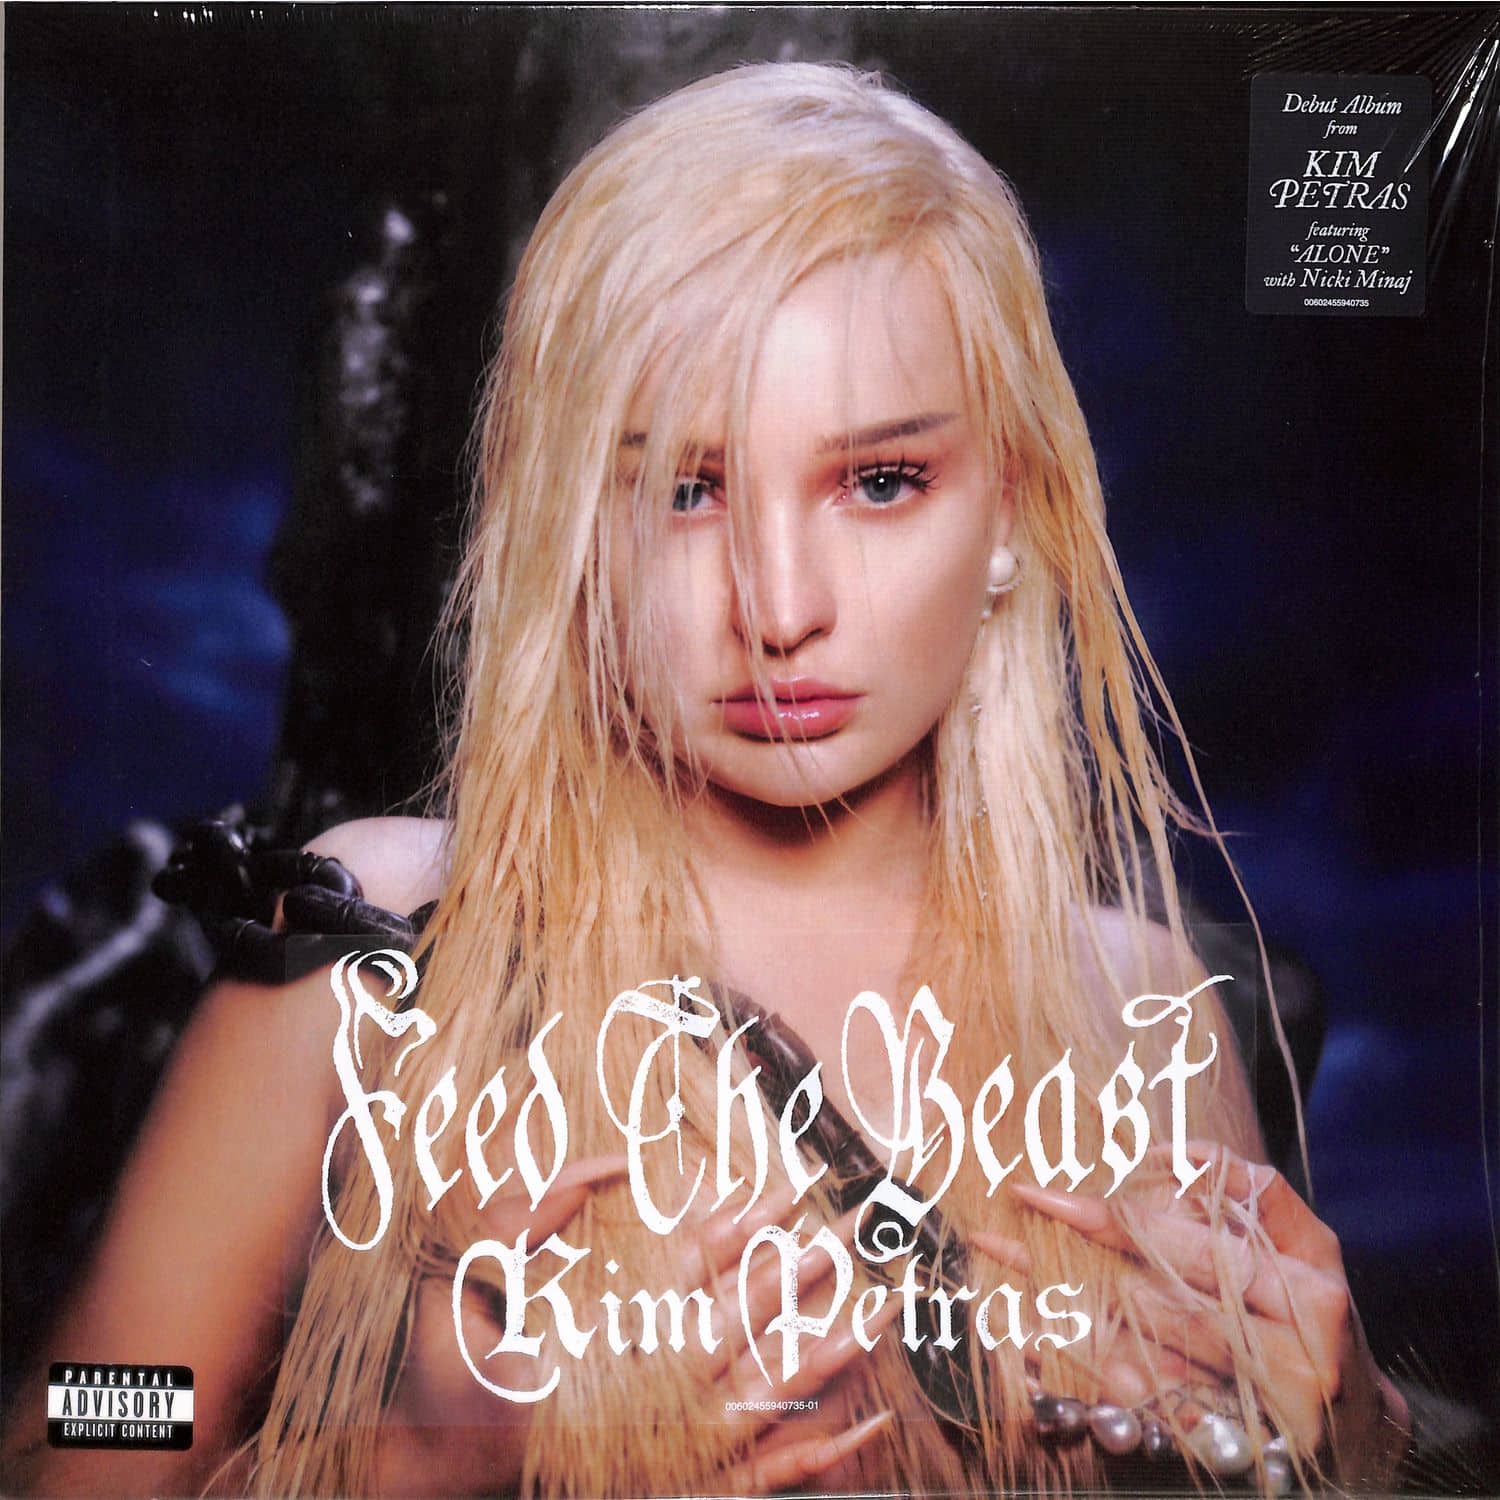 Kim Petras - FEED THE BEAST 